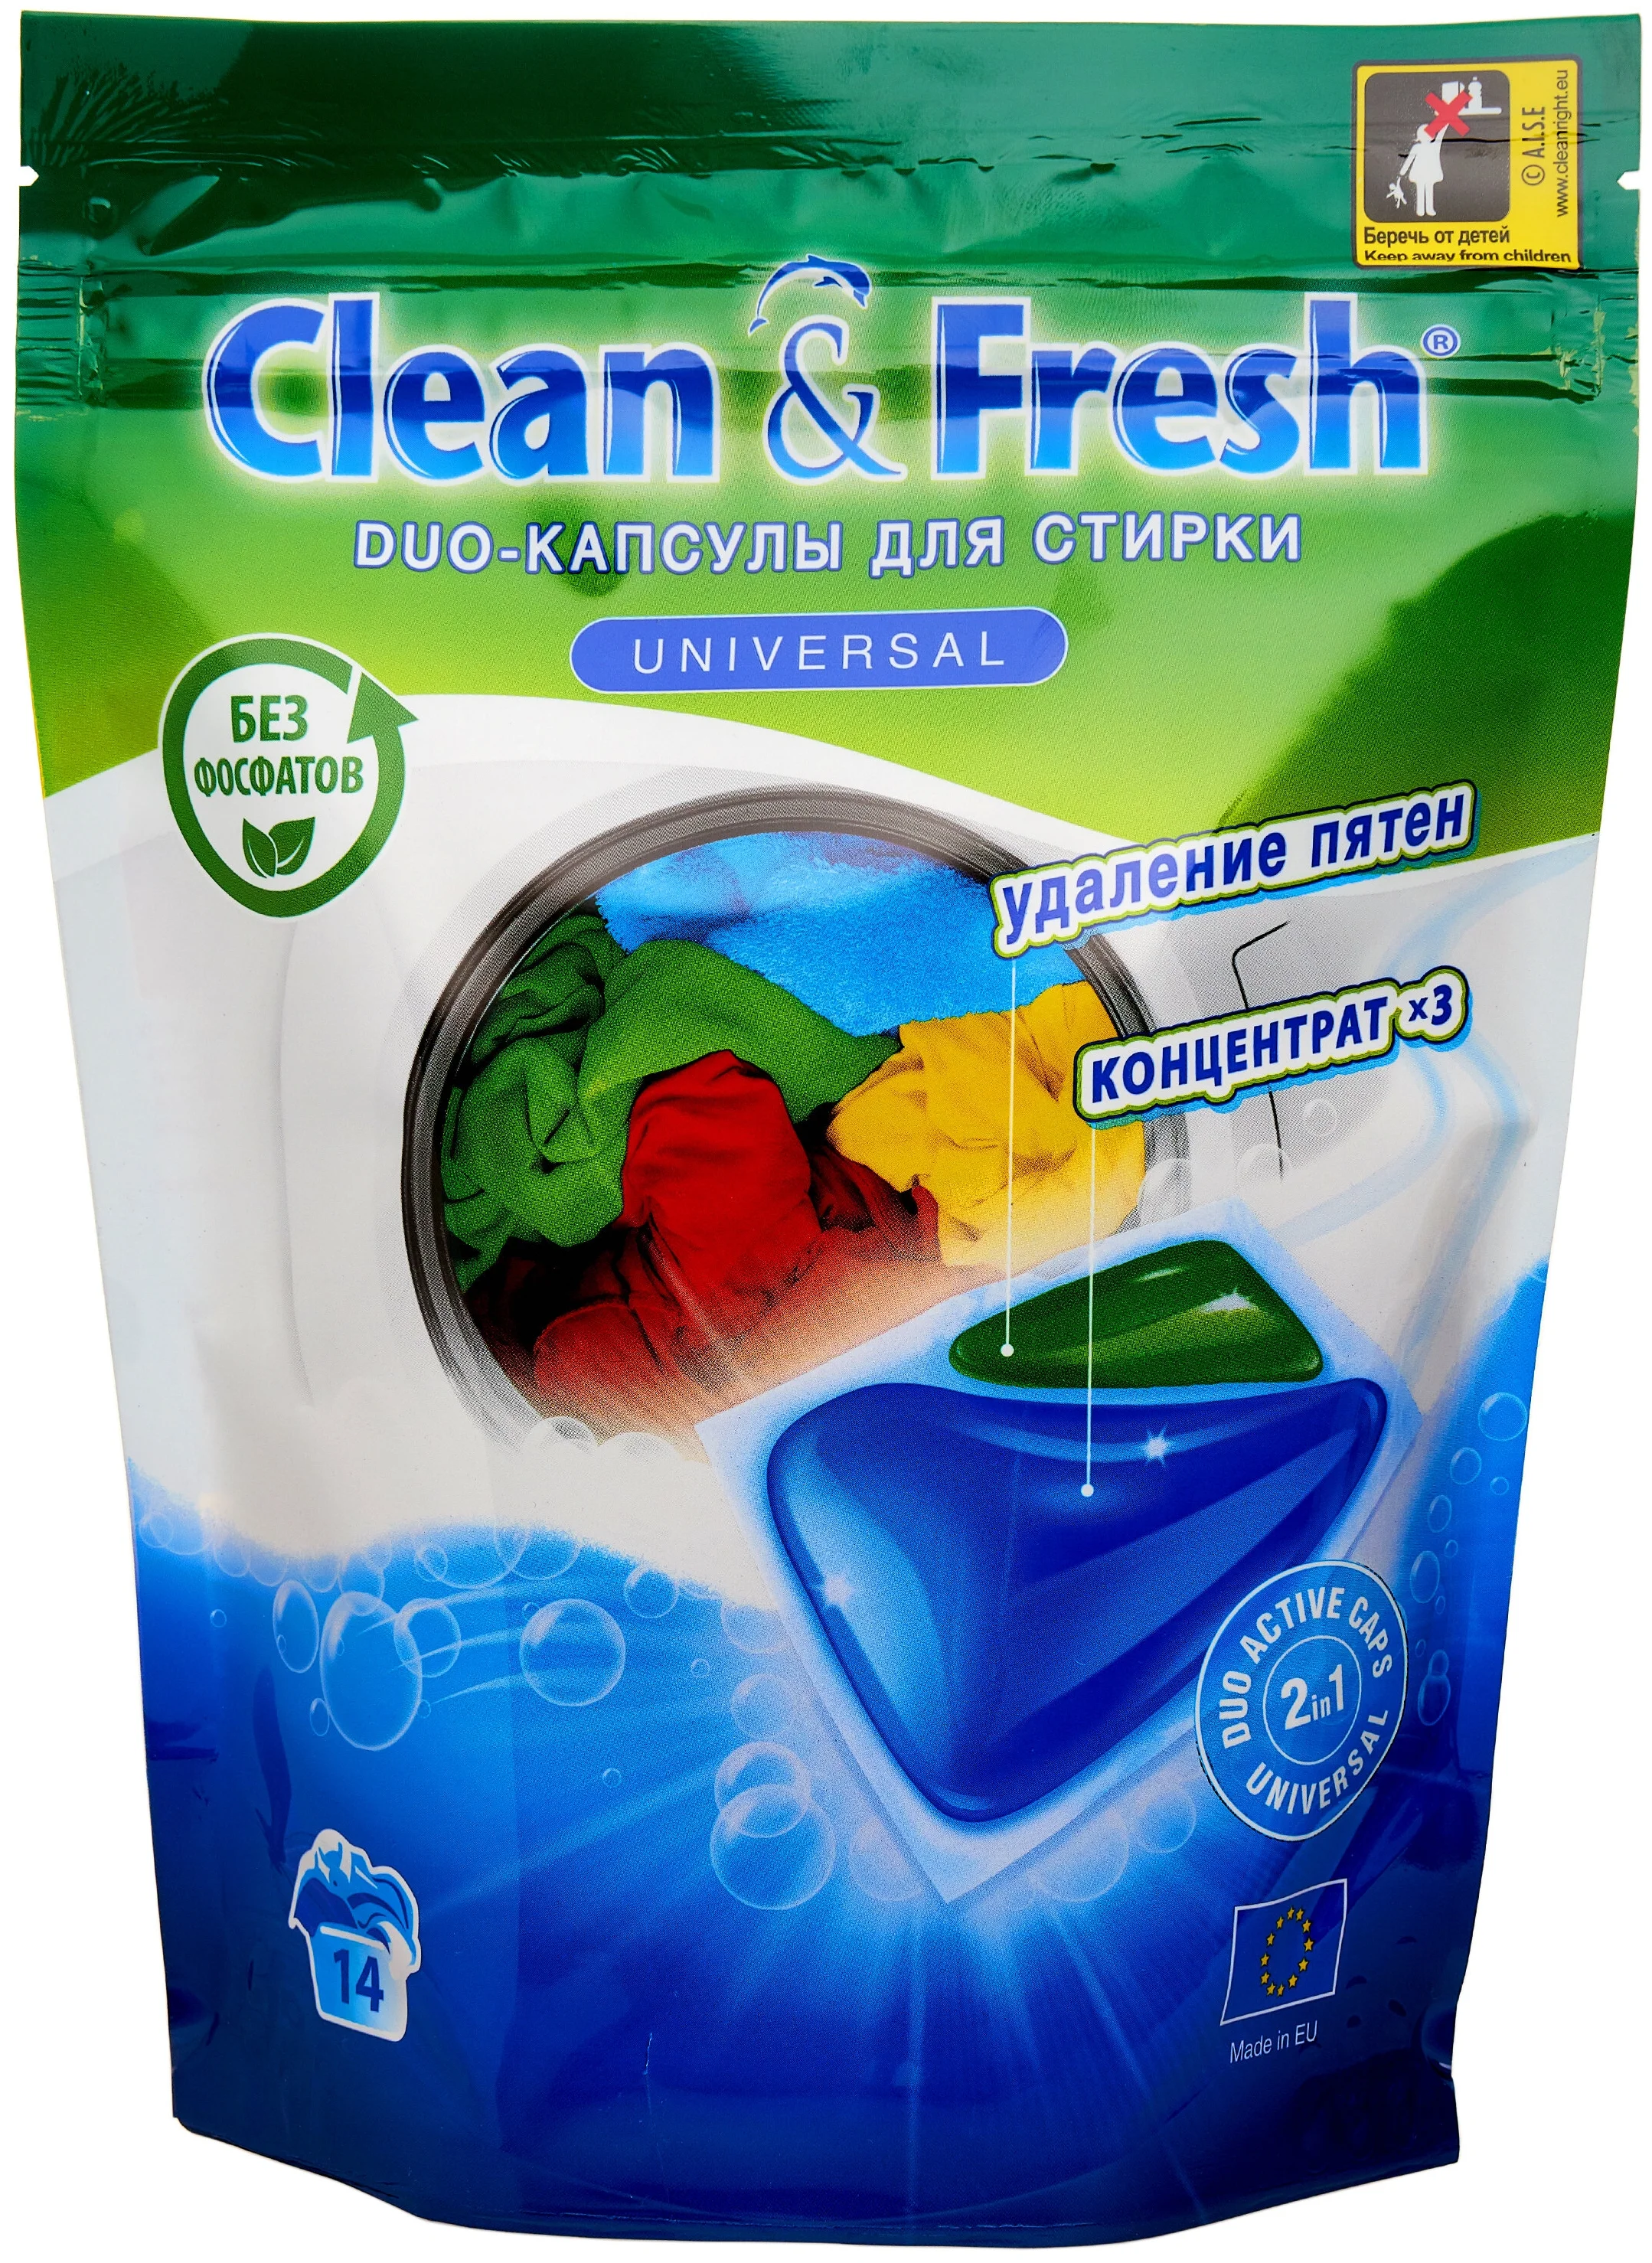 Clean & Fresh Duo Universal - тип стирки: машинная